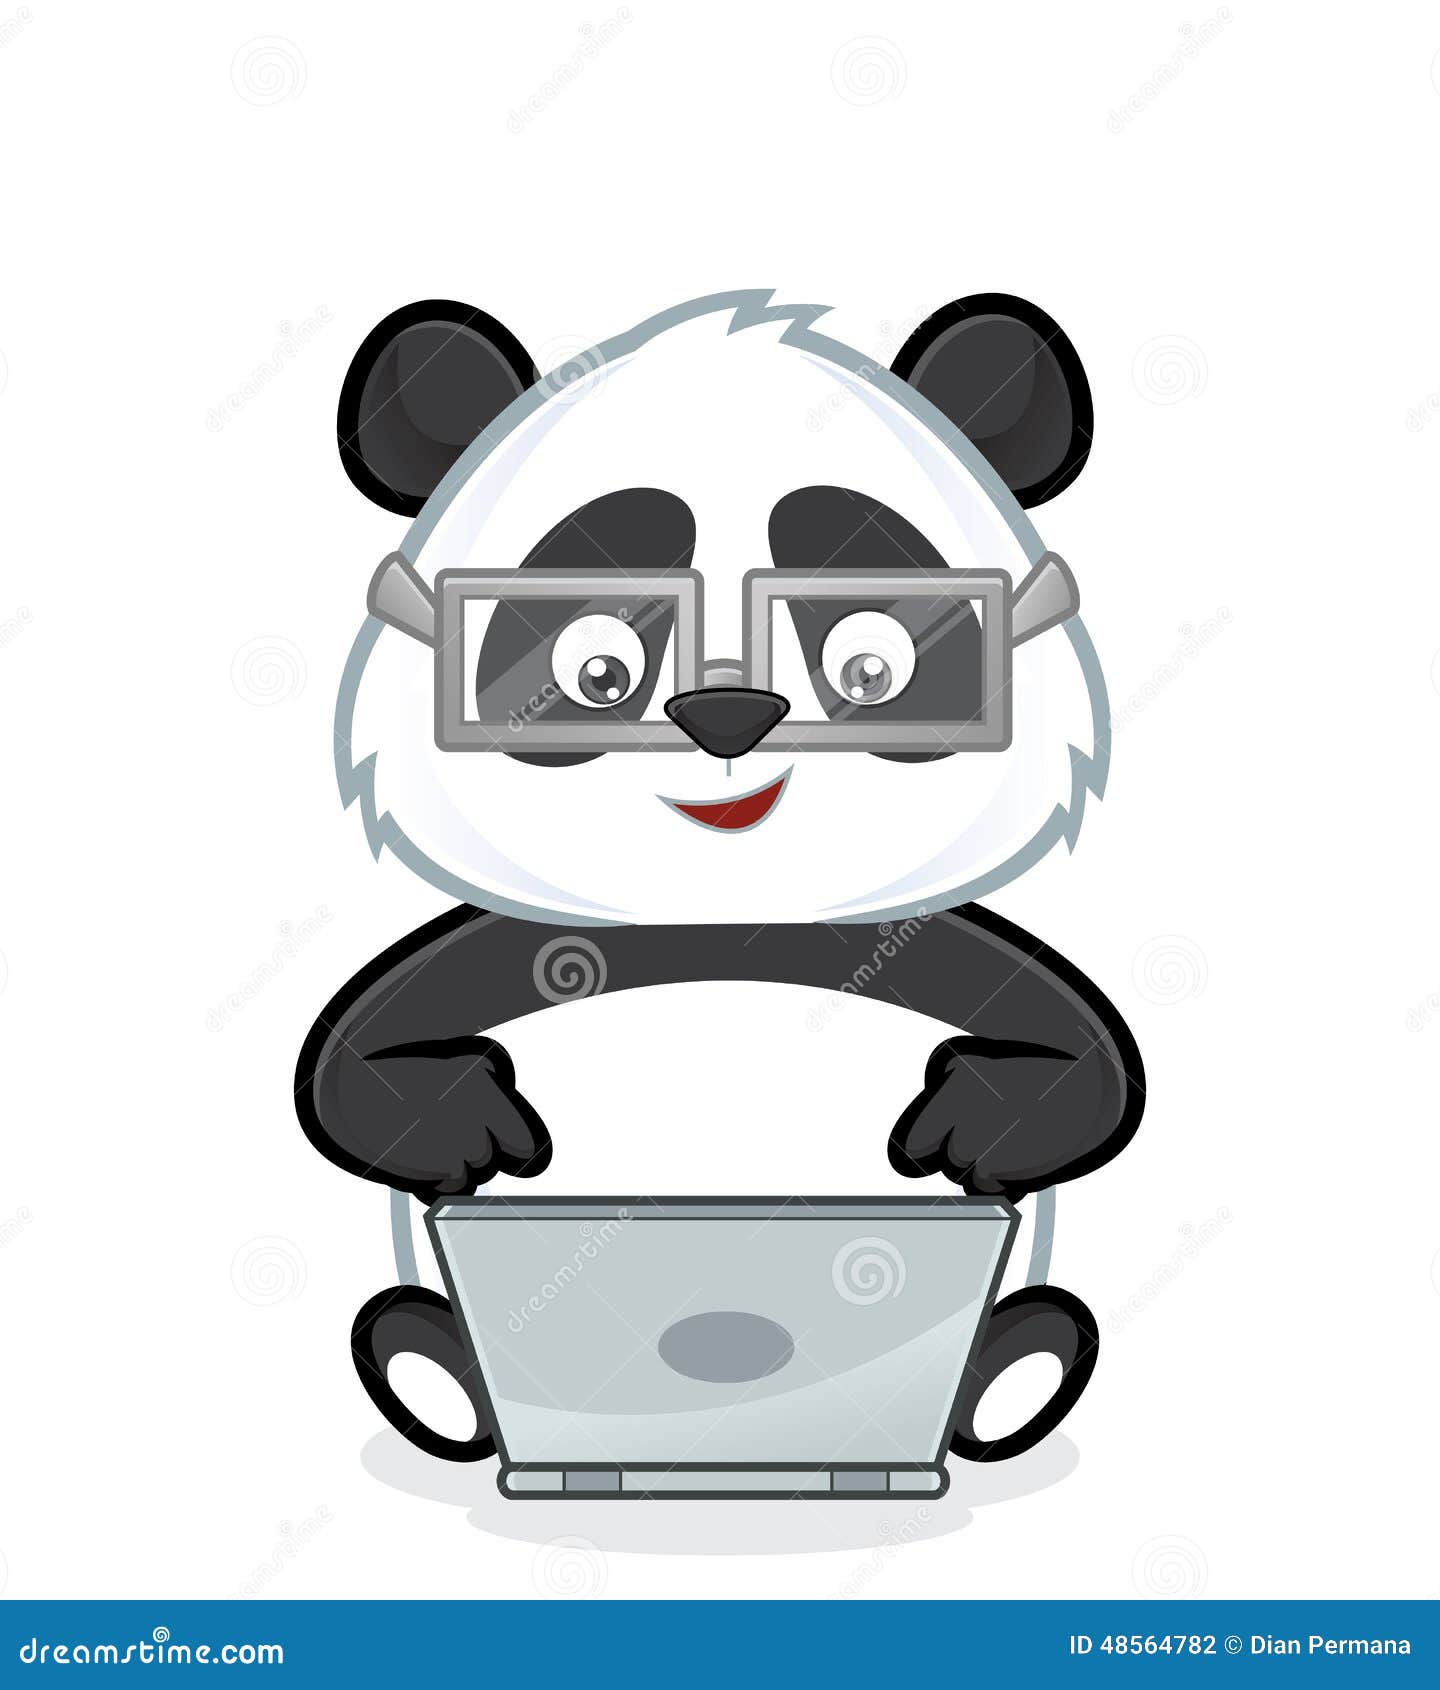 clipart panda website - photo #12